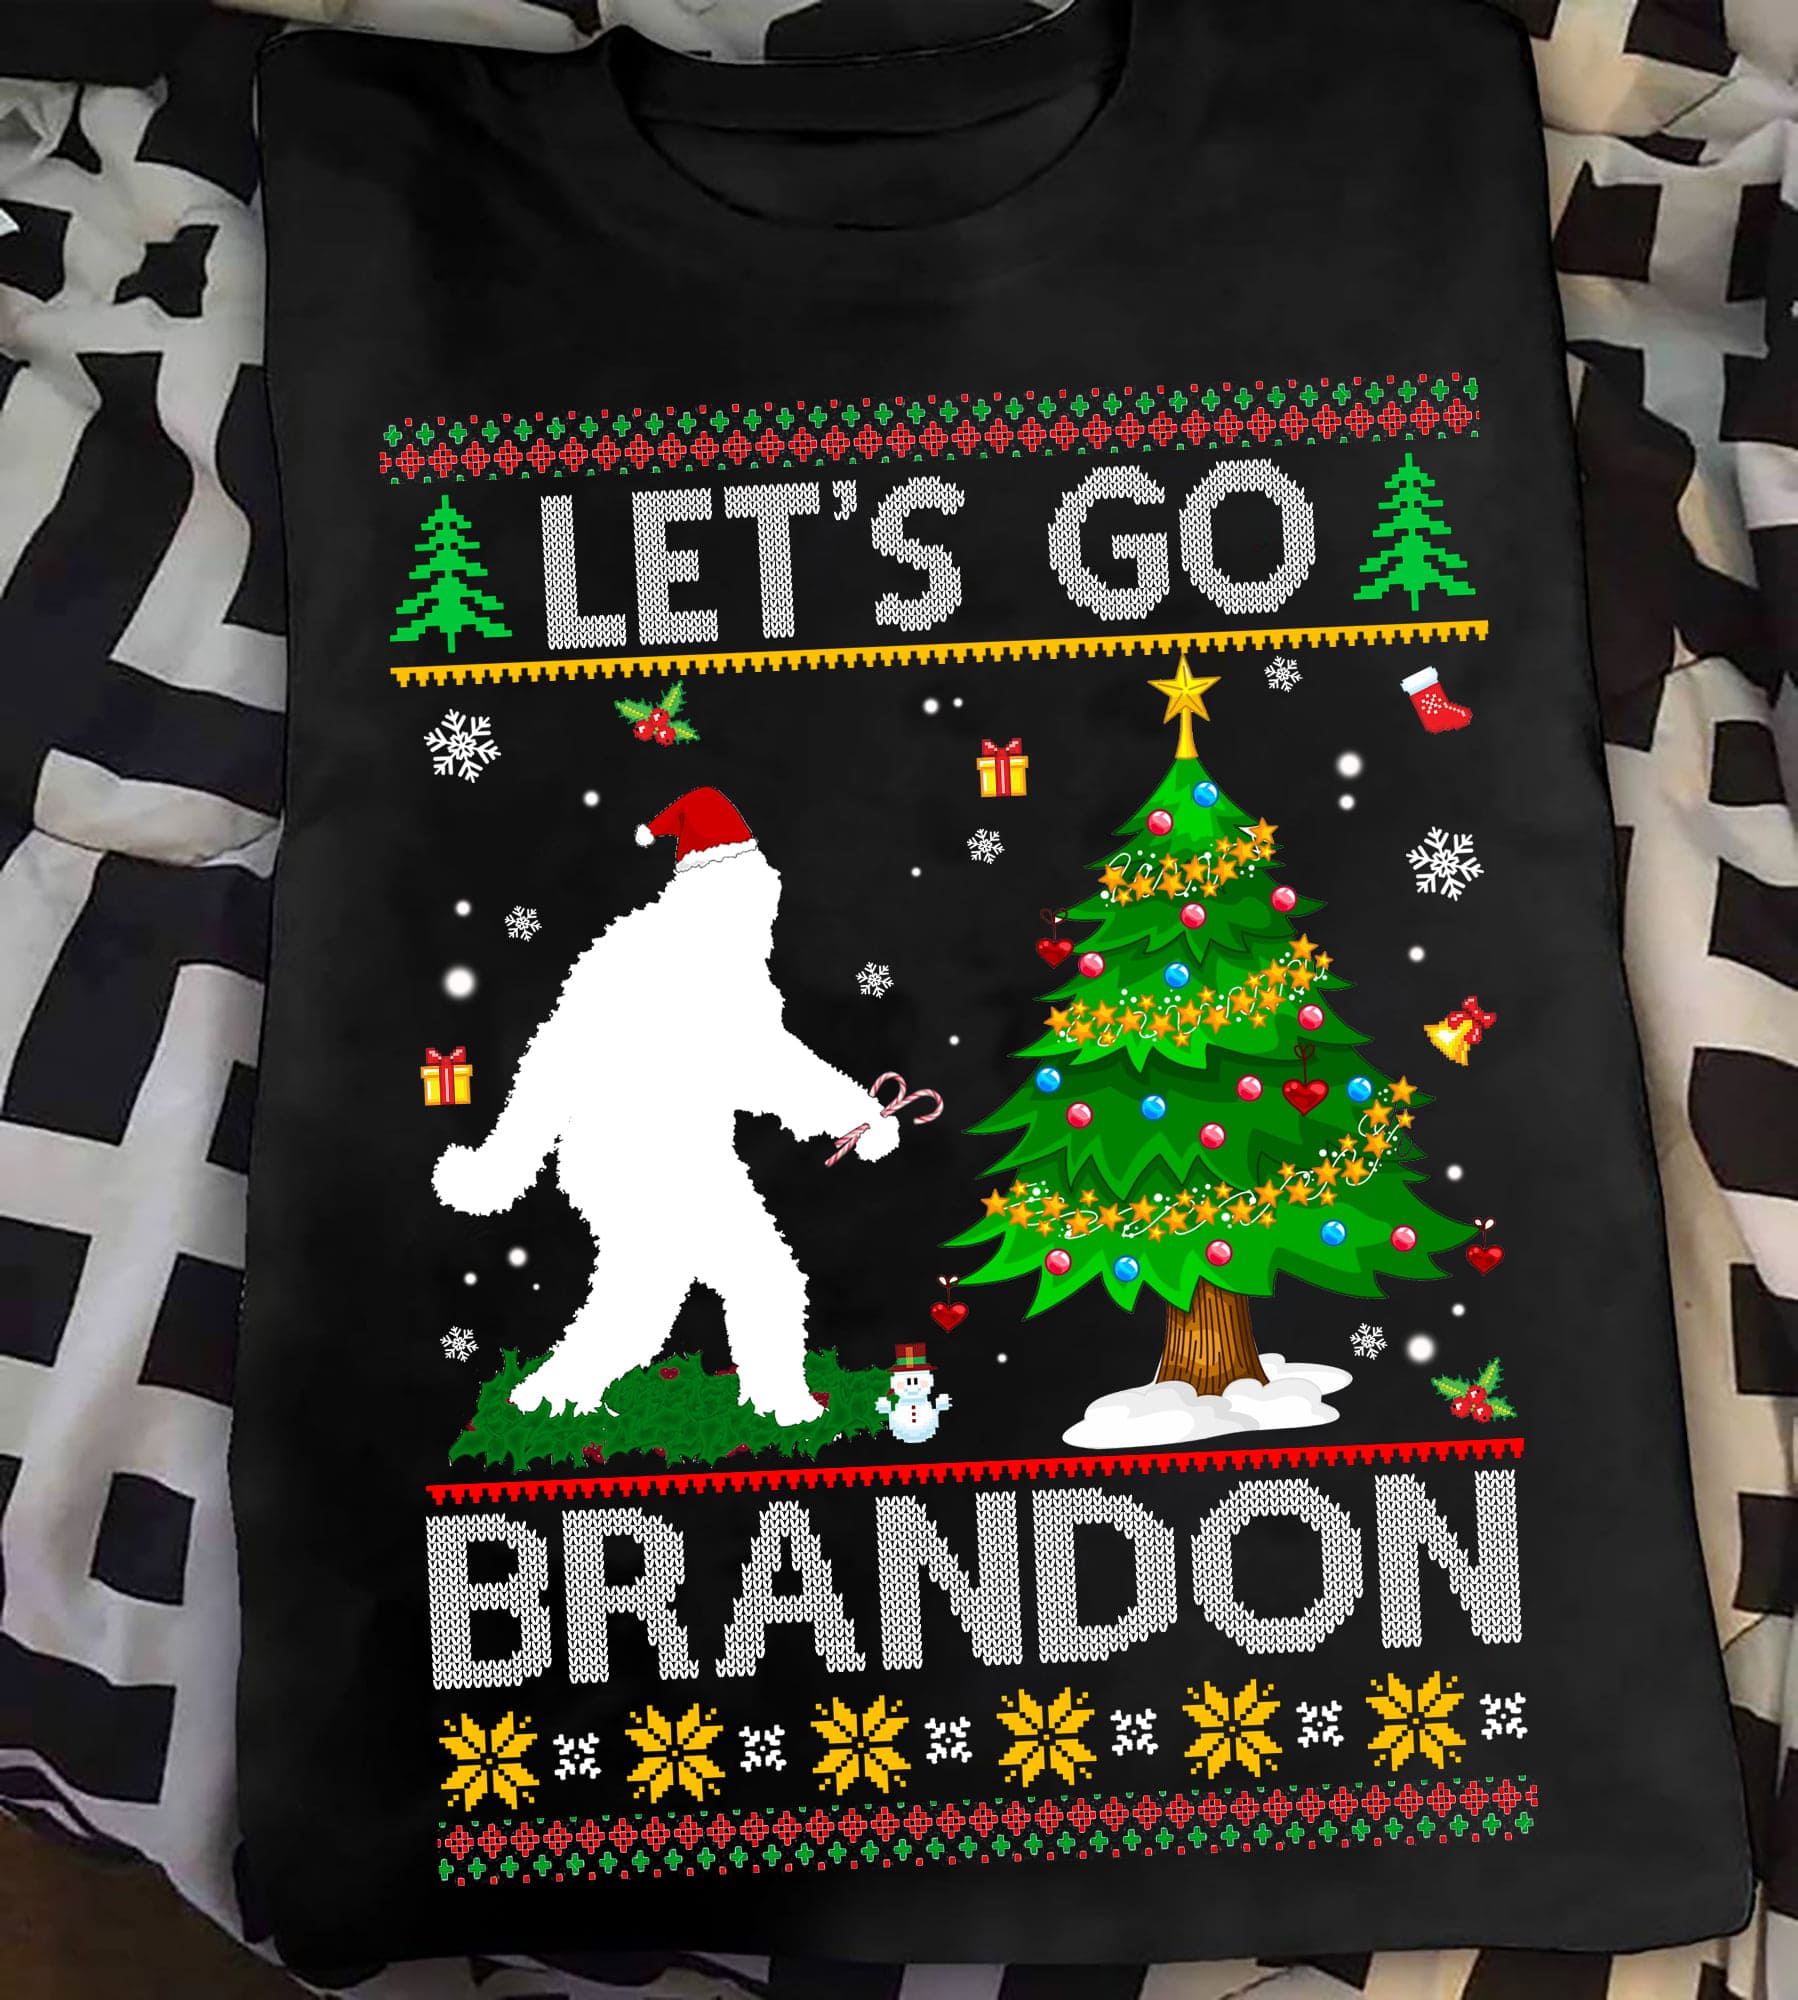 Let's go Brandon - Christmas ugly sweater, T-shirt for Christmas, Bigfoot wearing Santa hat